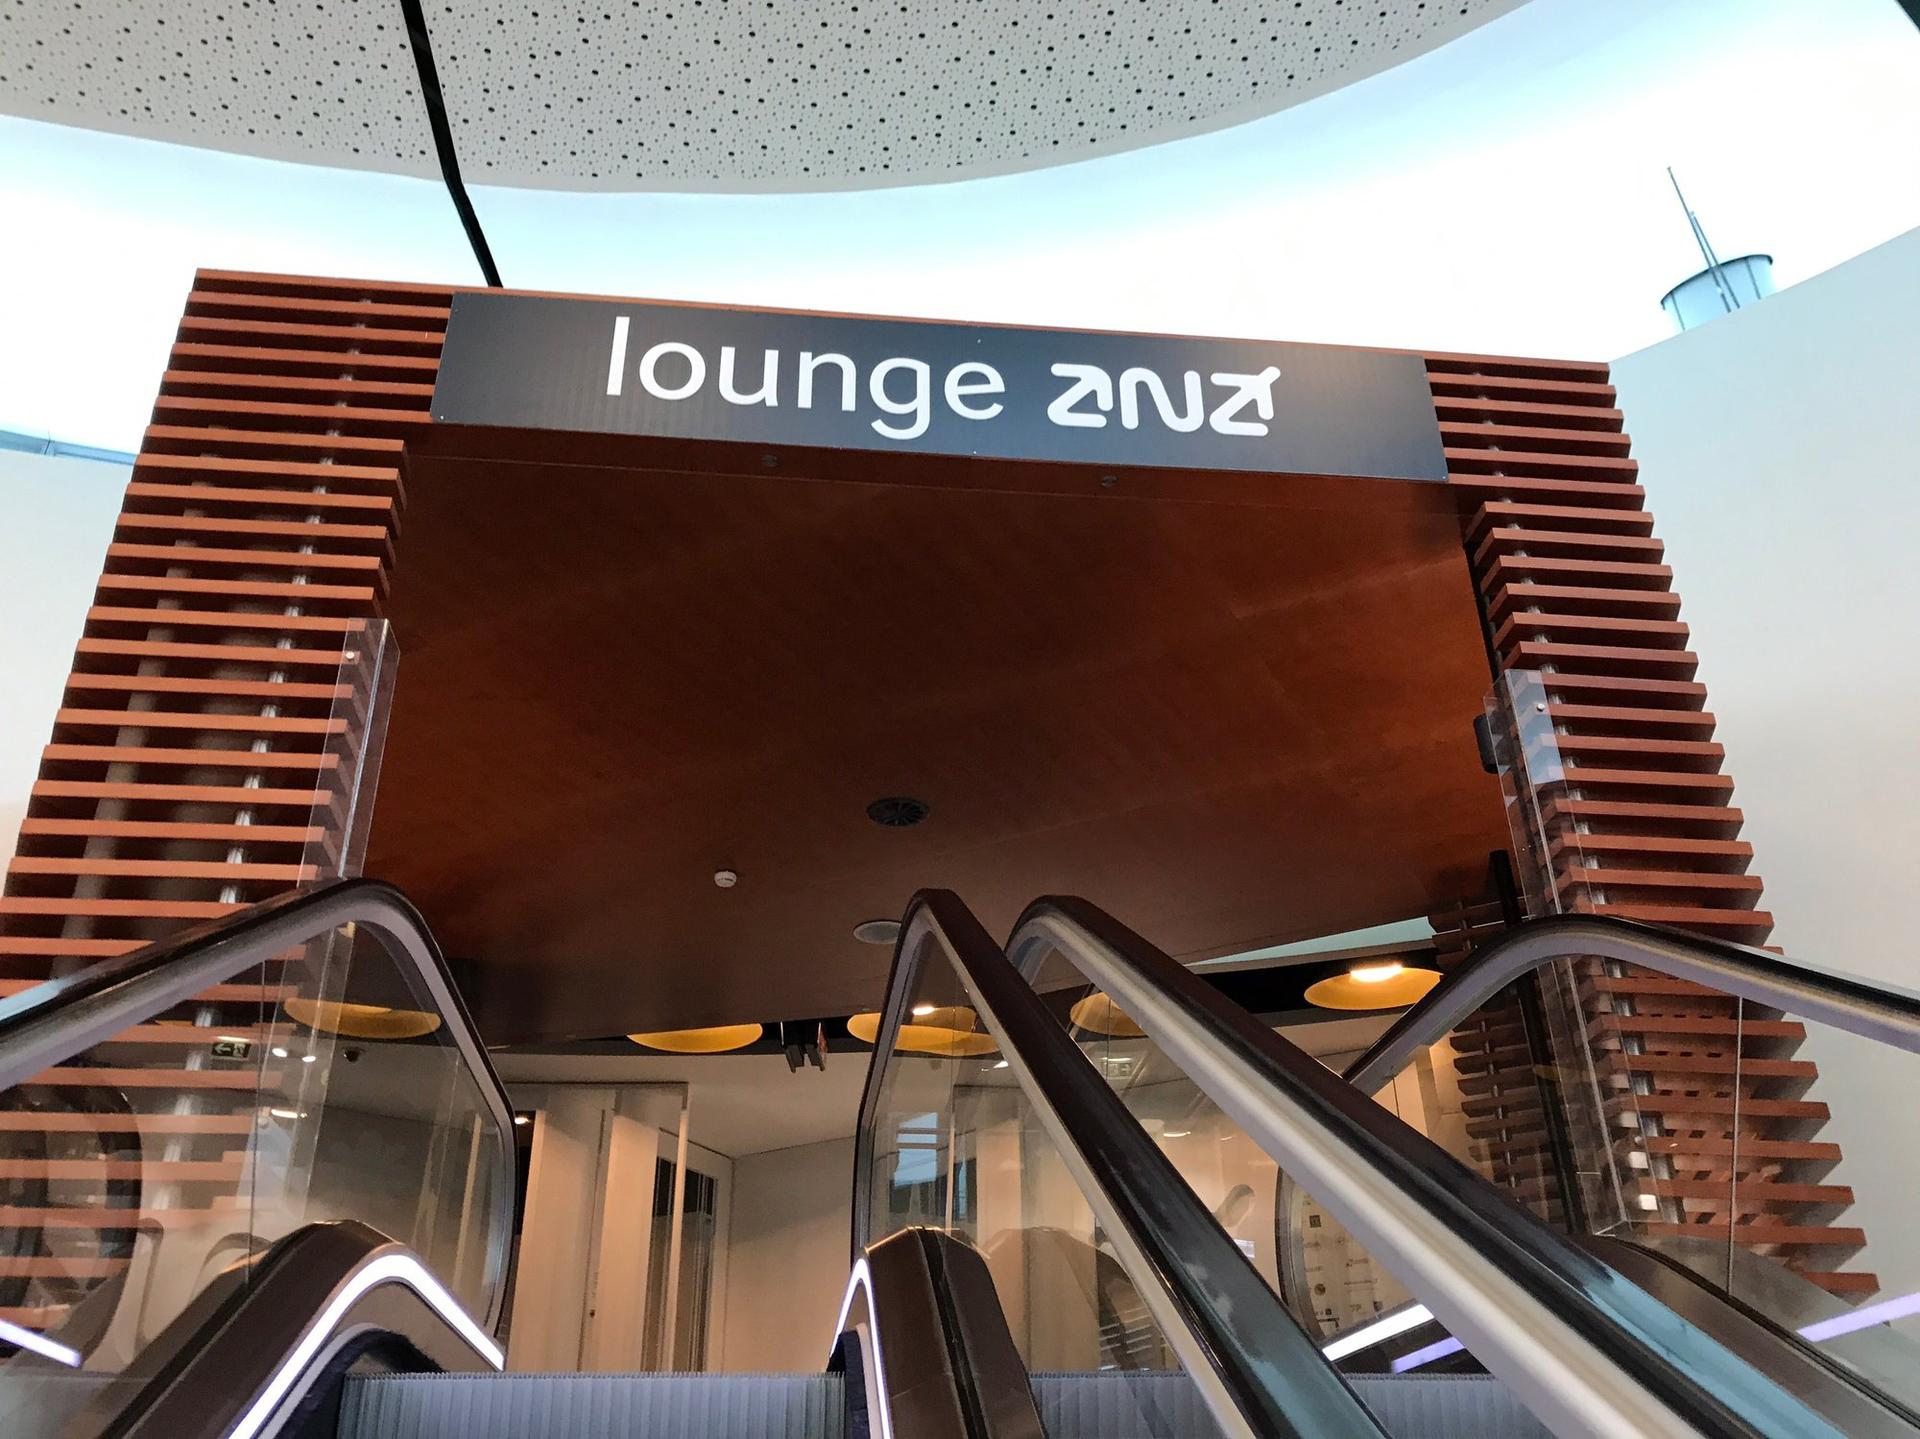 ANA Airport Lounge image 25 of 49